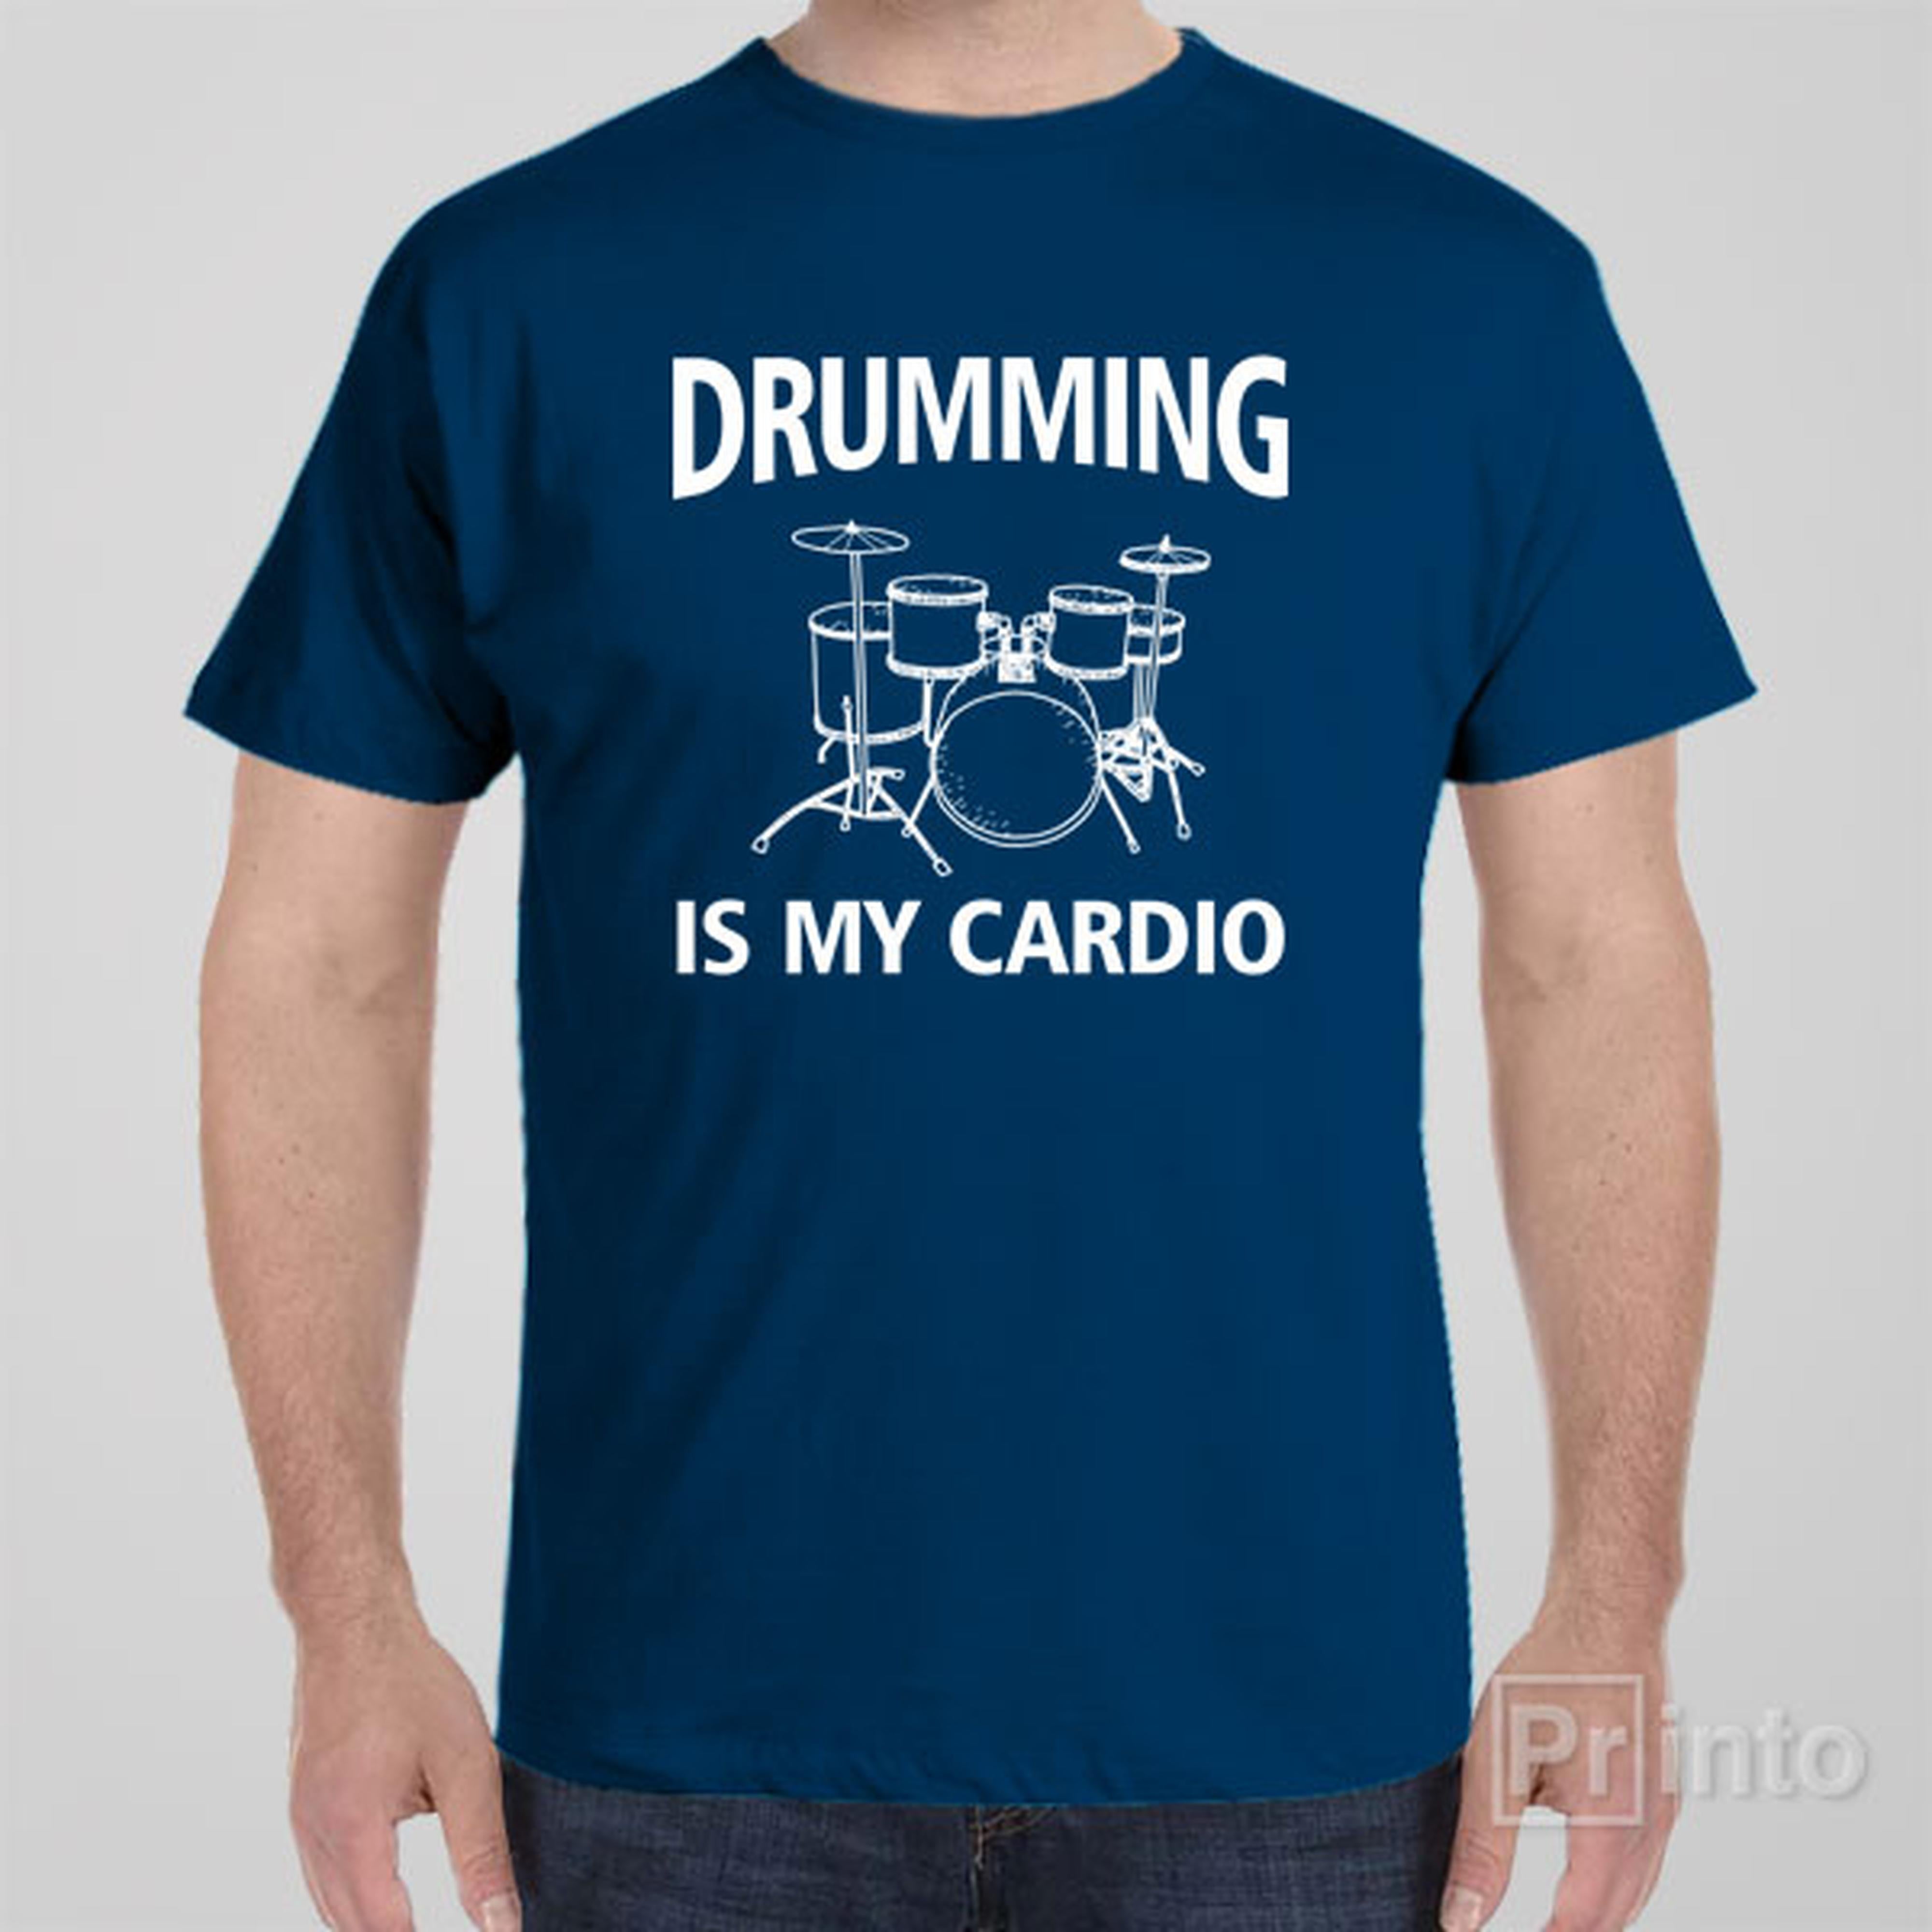 drumming-is-my-cardio-t-shirt